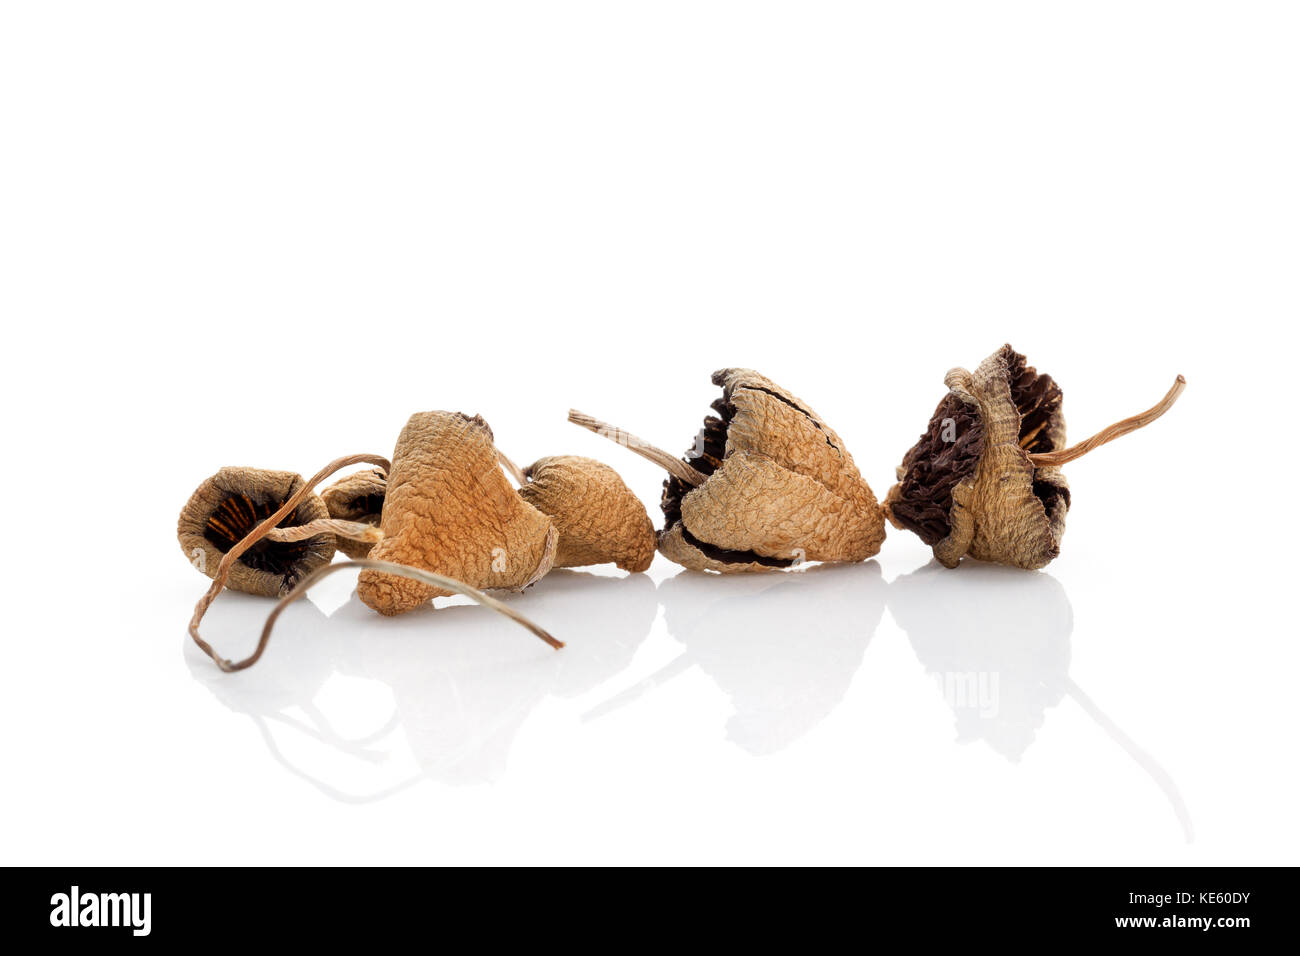 Liberty caps, magic mushrooms. Psilocybin mushroom isolated on white background. Natural remedy, alternative medicine. Stock Photo